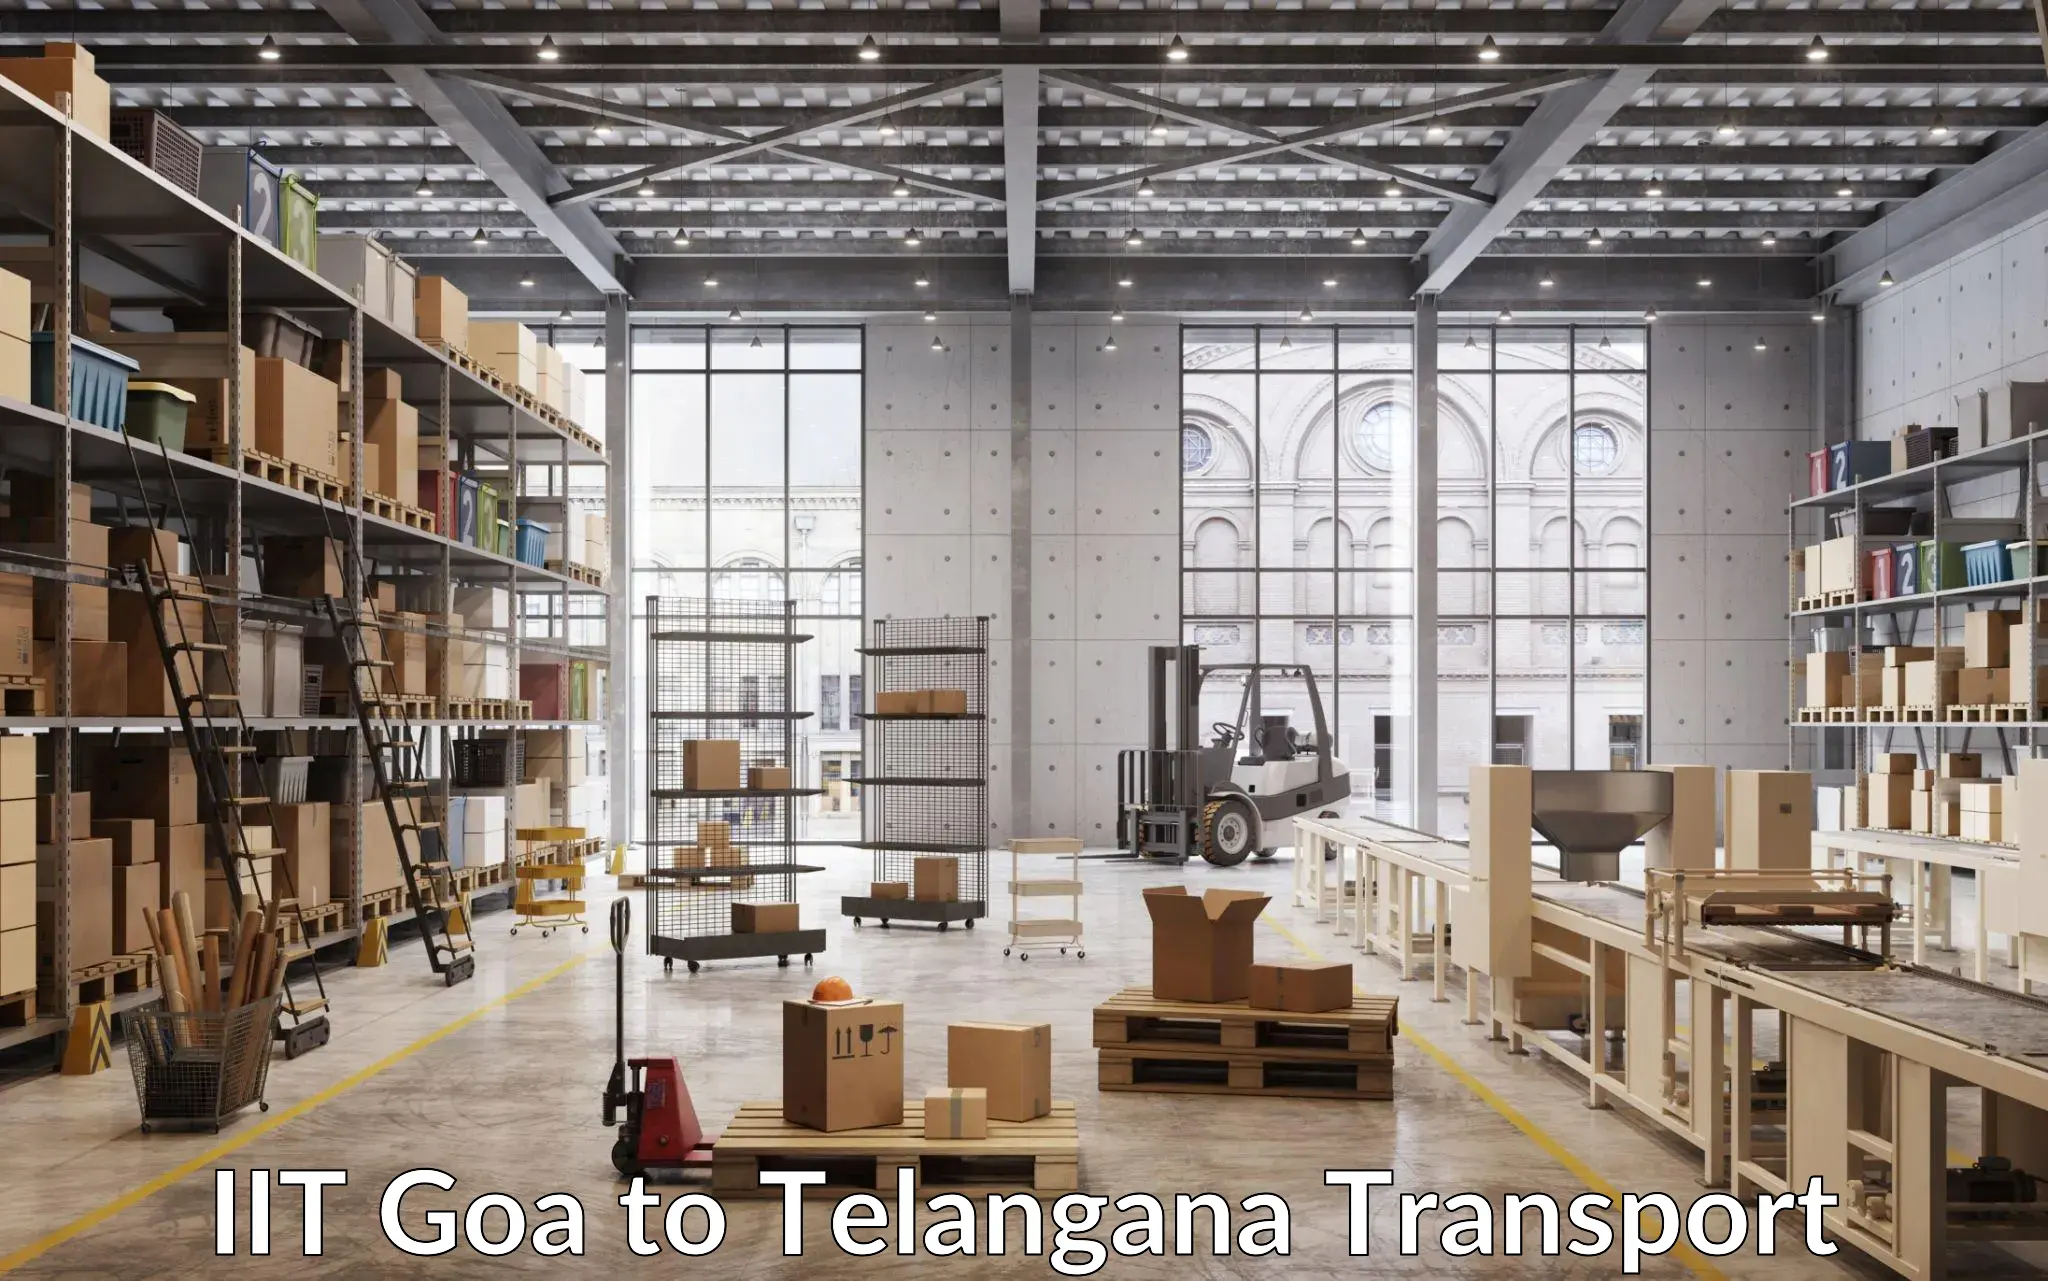 Lorry transport service IIT Goa to Gangadhara